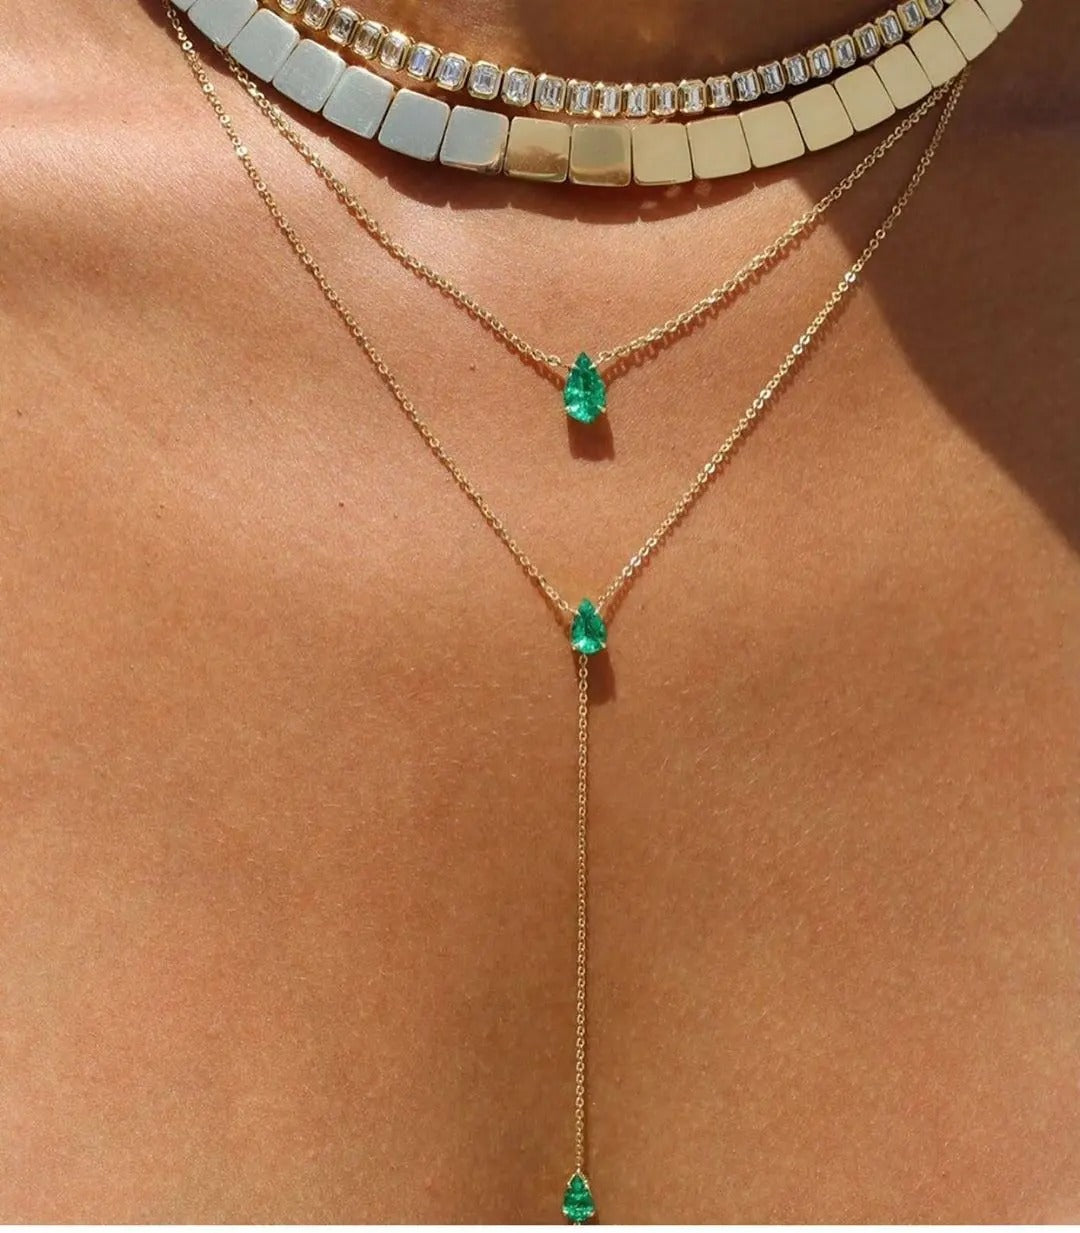 MiniLux Double diamond zirconia necklace